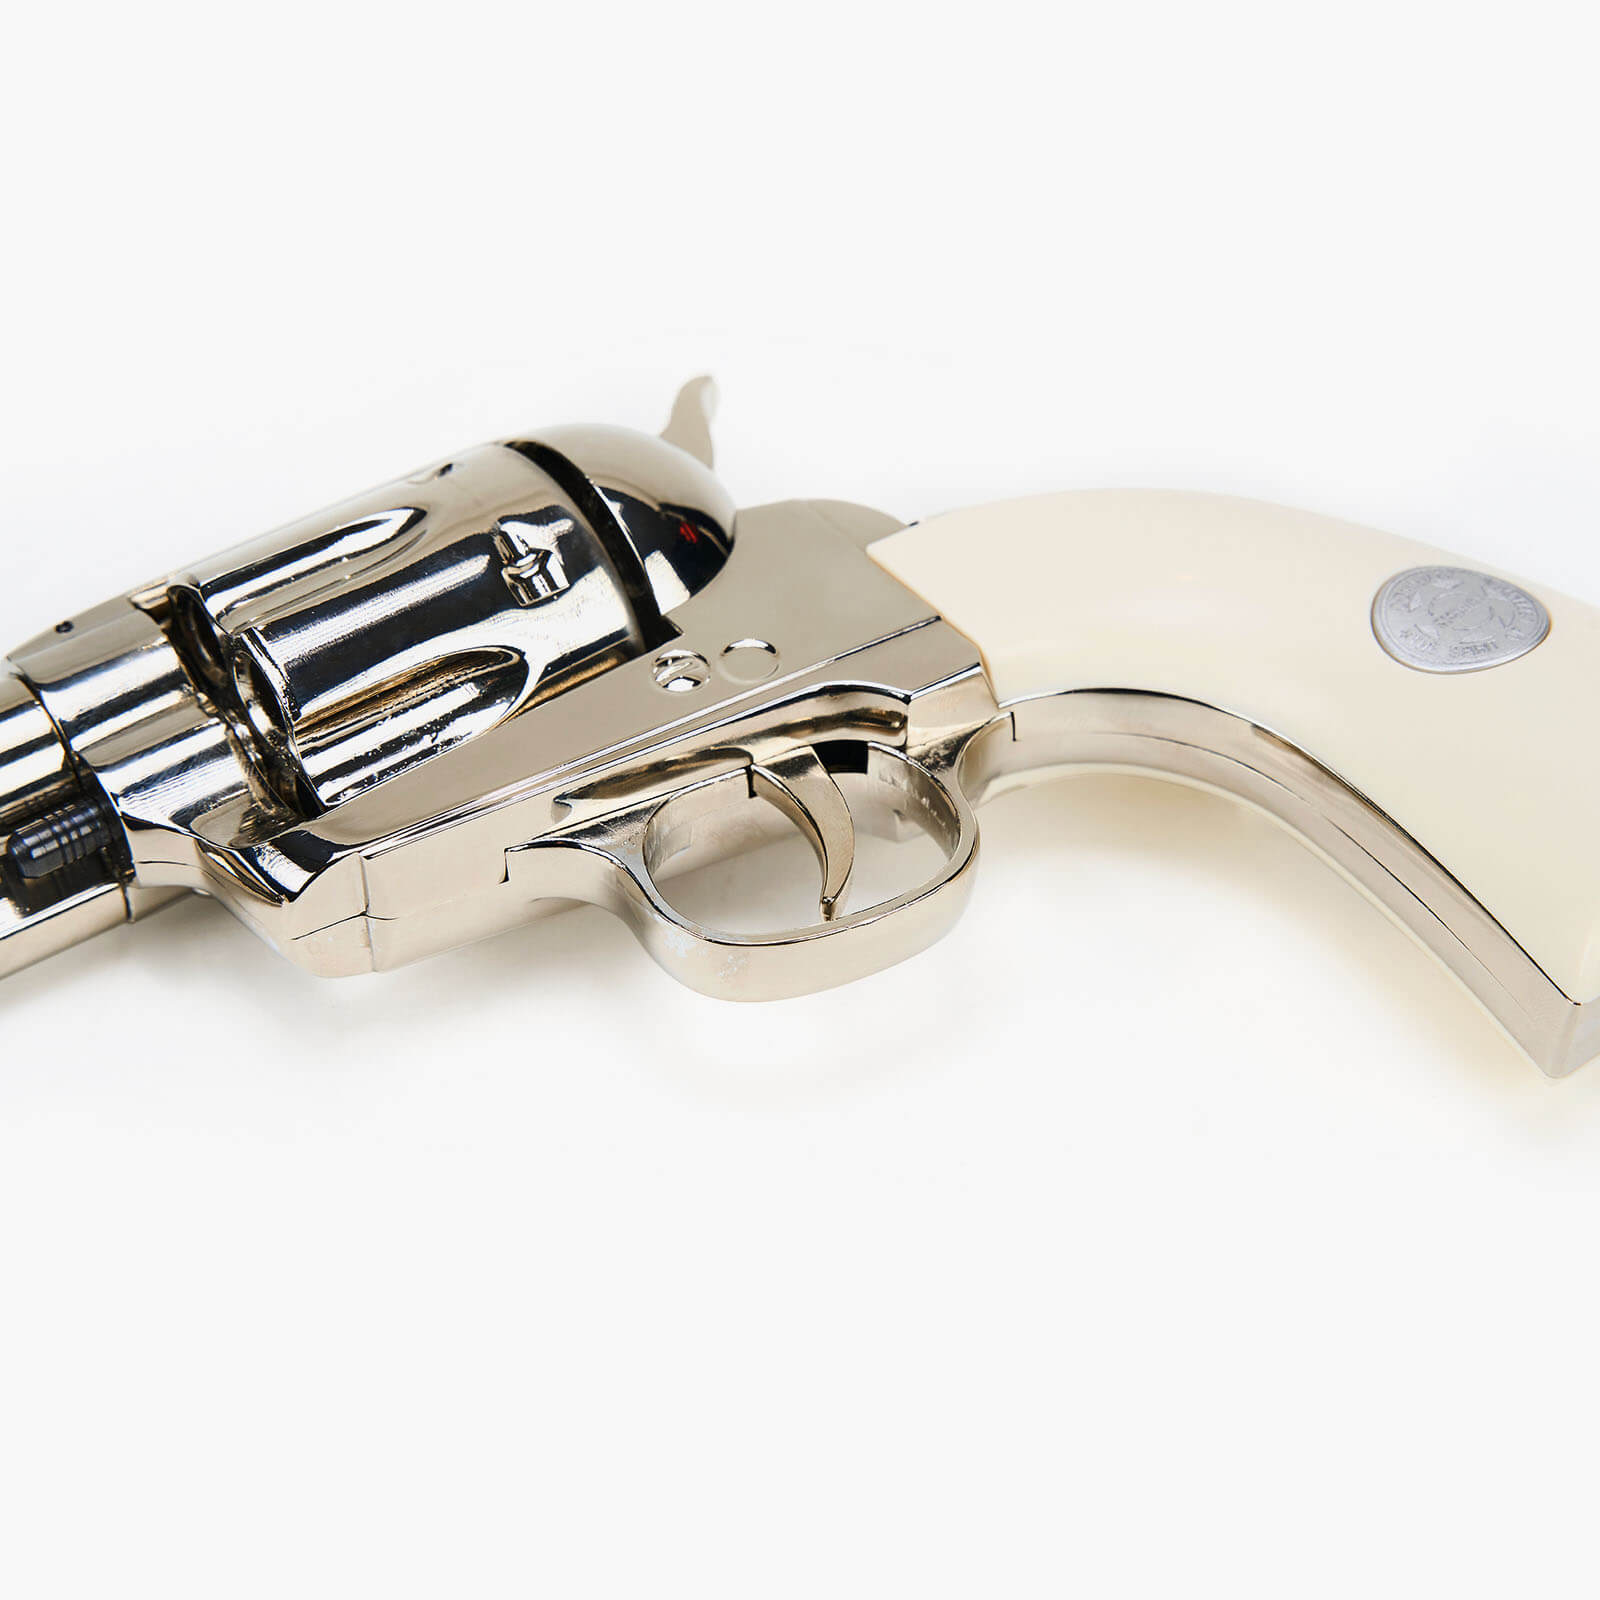 Cowboy Revolver Toy | Orbeez Gun